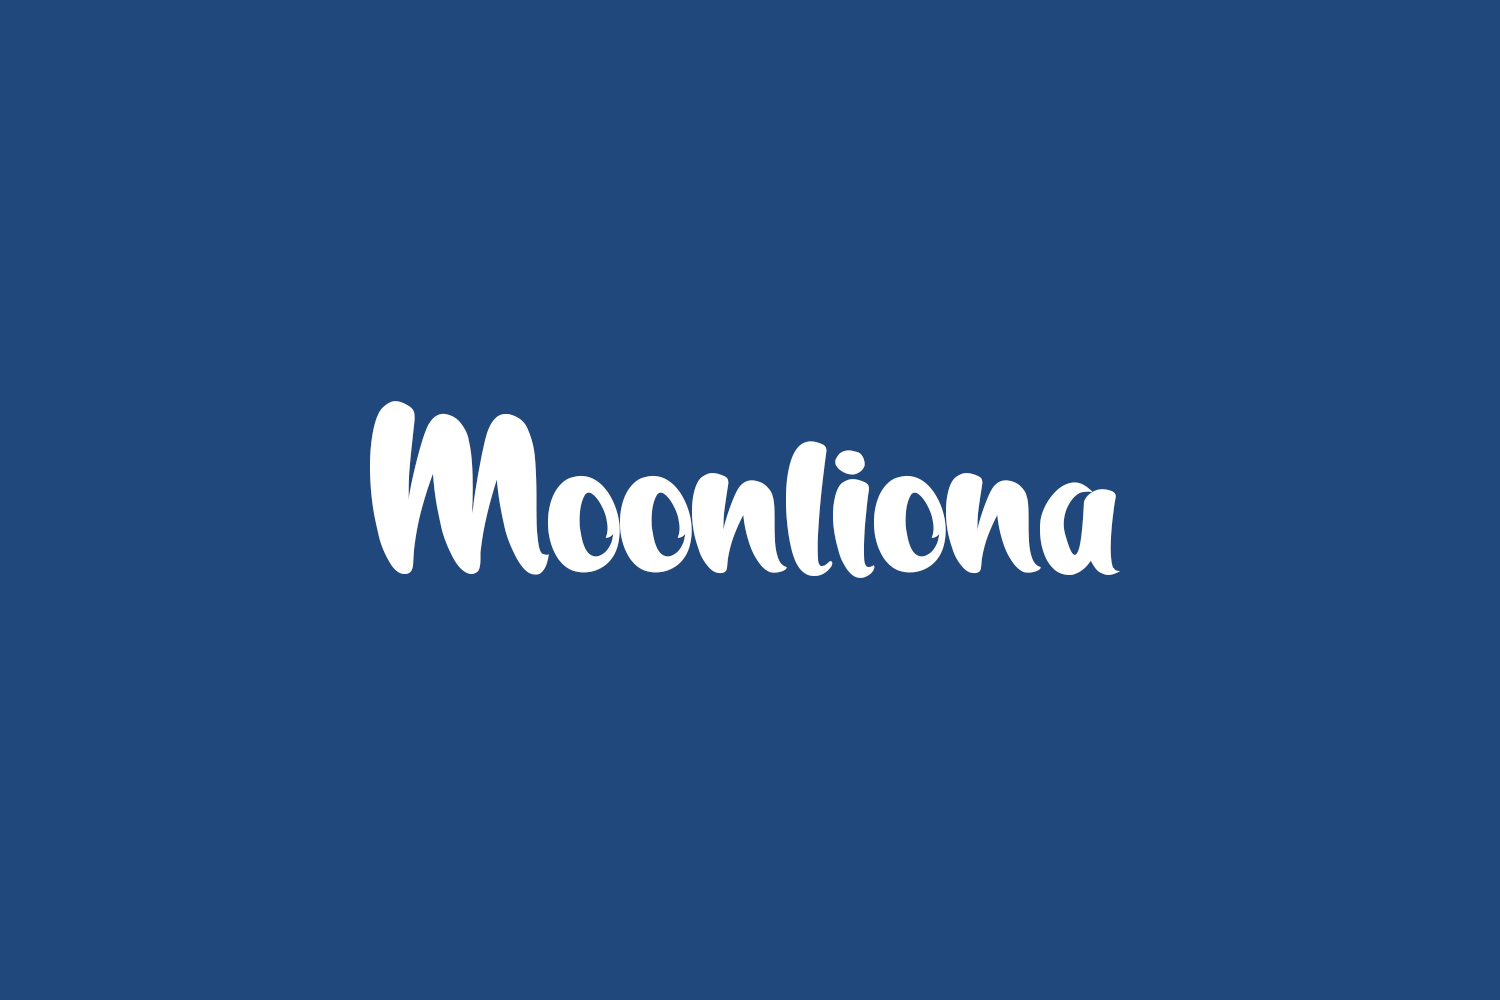 Moonliona Free Font